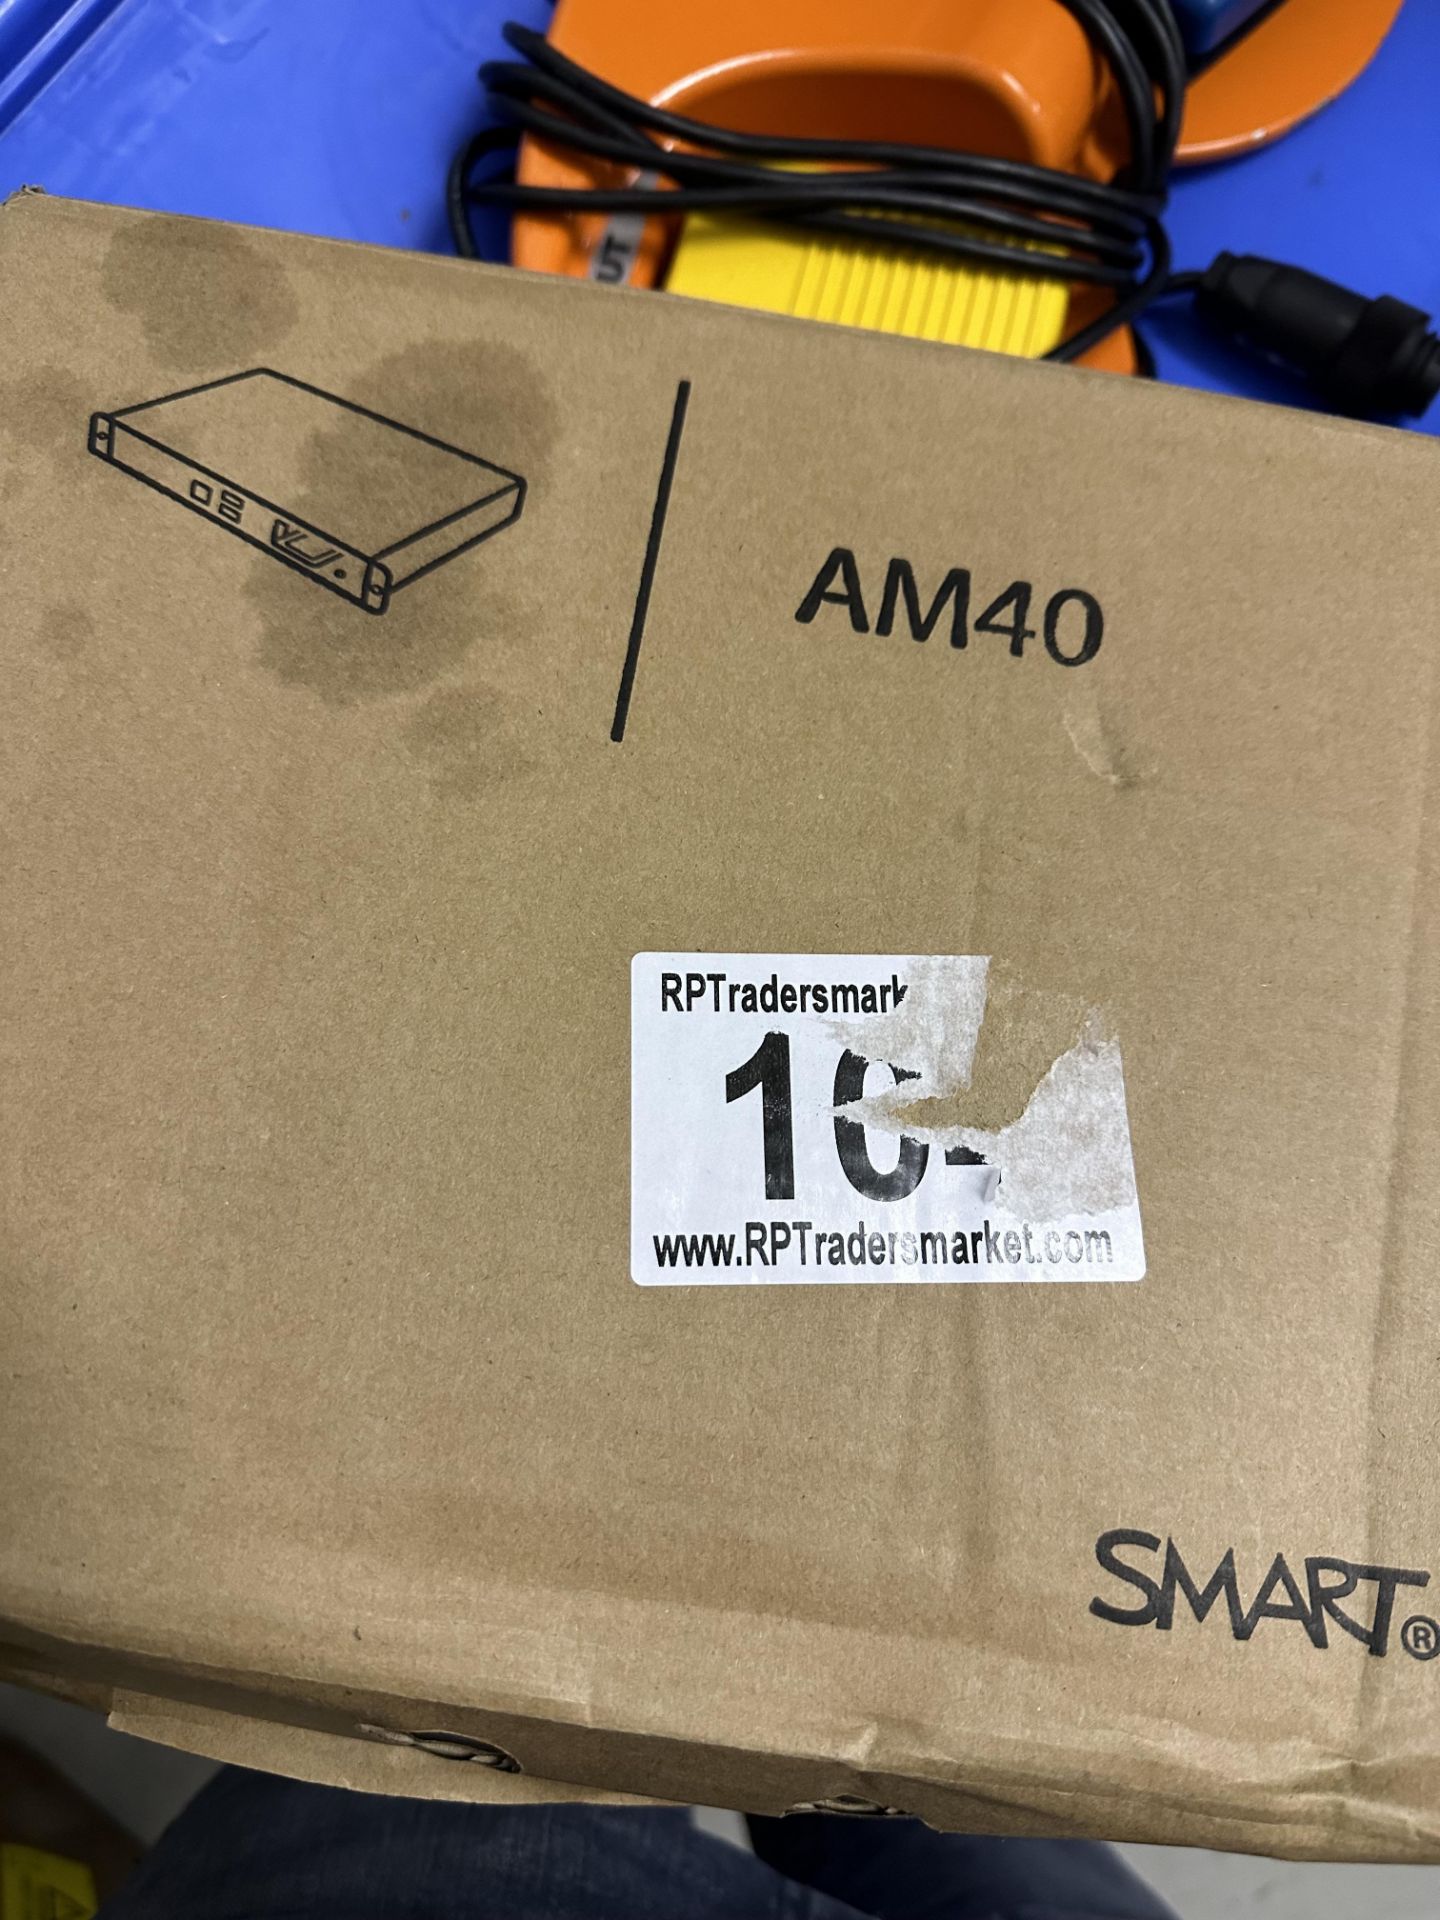 AM40 SMART - Image 2 of 2